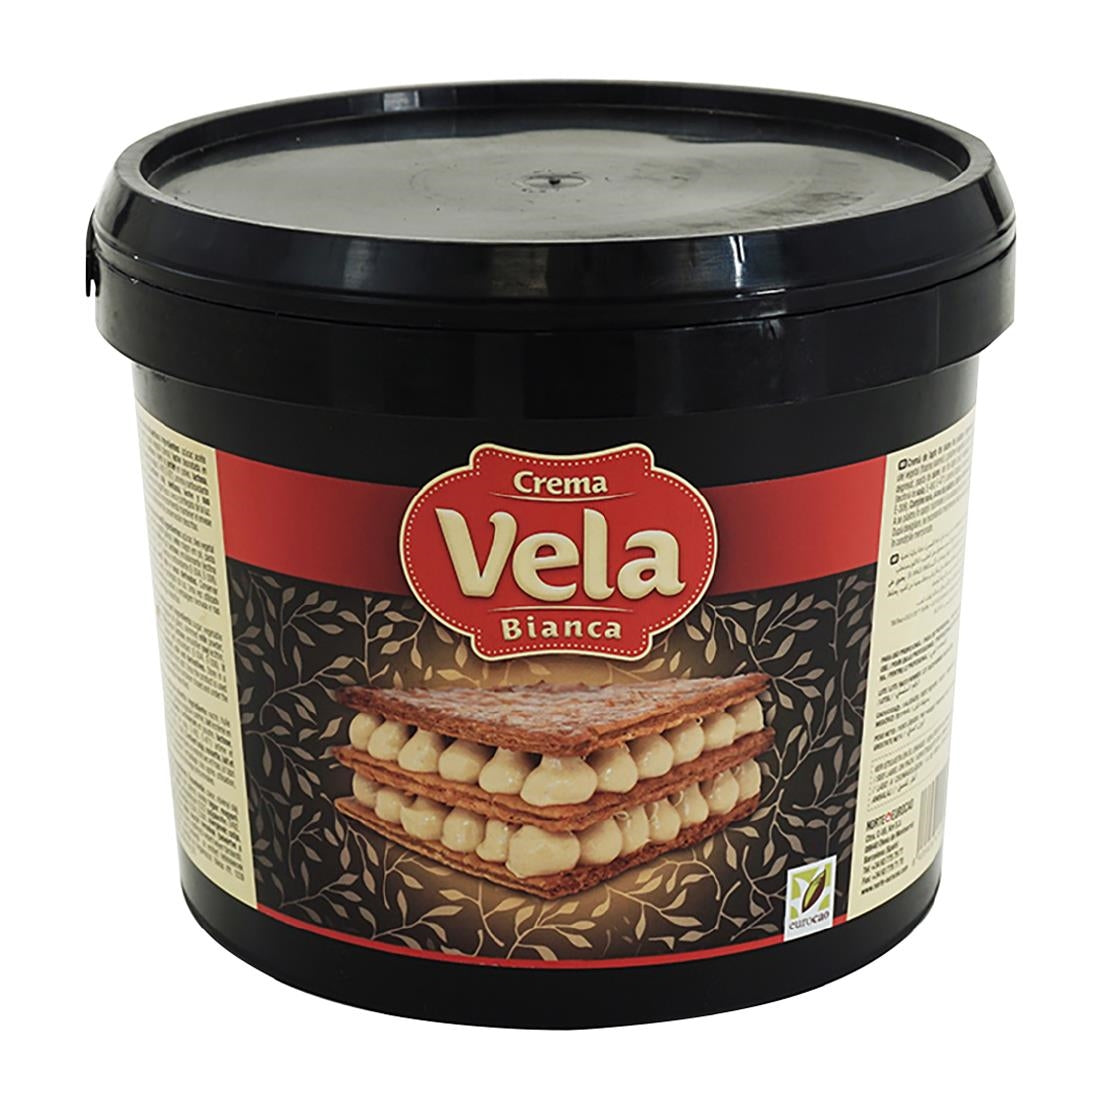 DX516 Vela White Chocolate Hazelnut Spread (6kg)